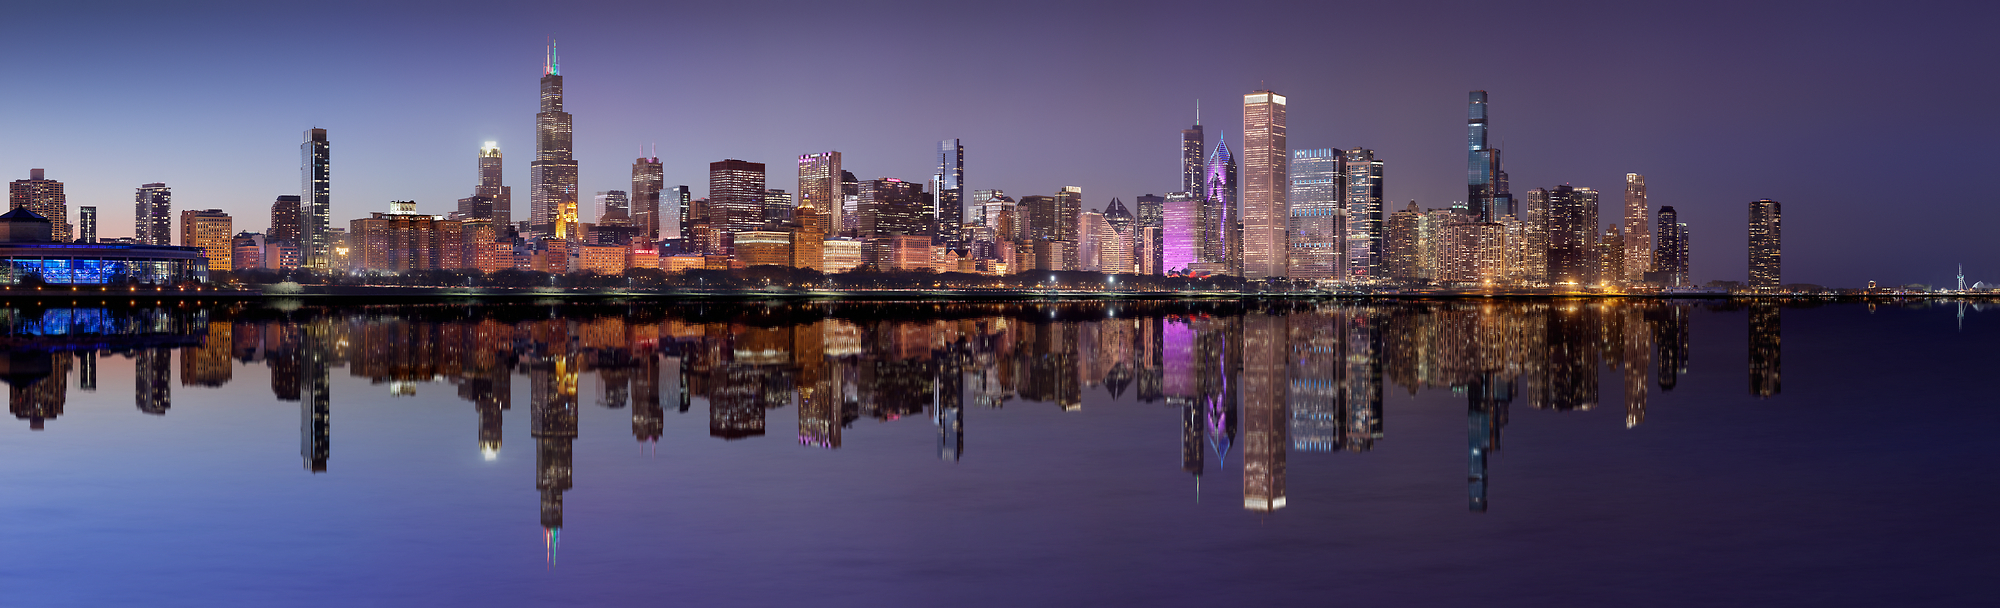 Photos of Chicago at Night - VAST